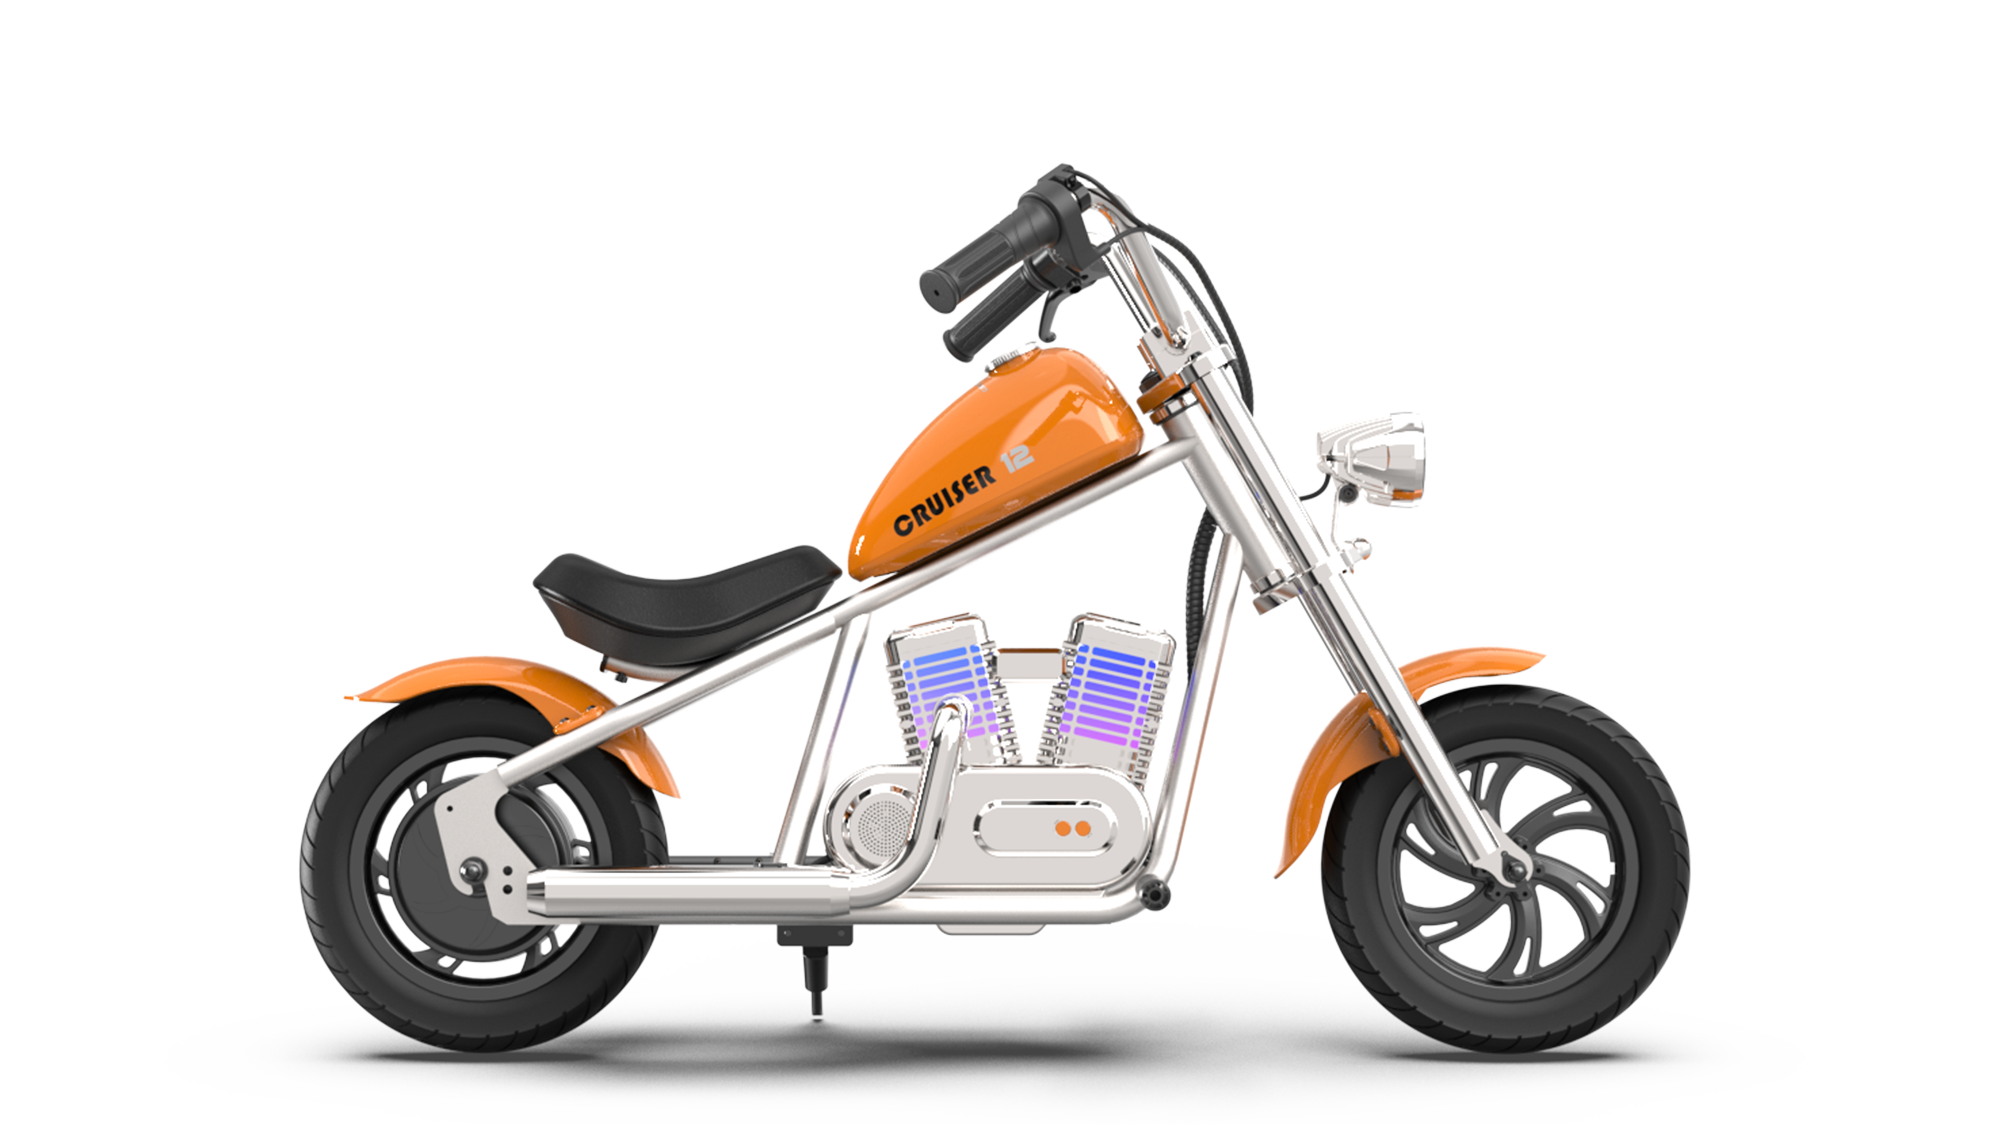 Motorcycle Miniature Chopper Style Harley Davidson Toy Child